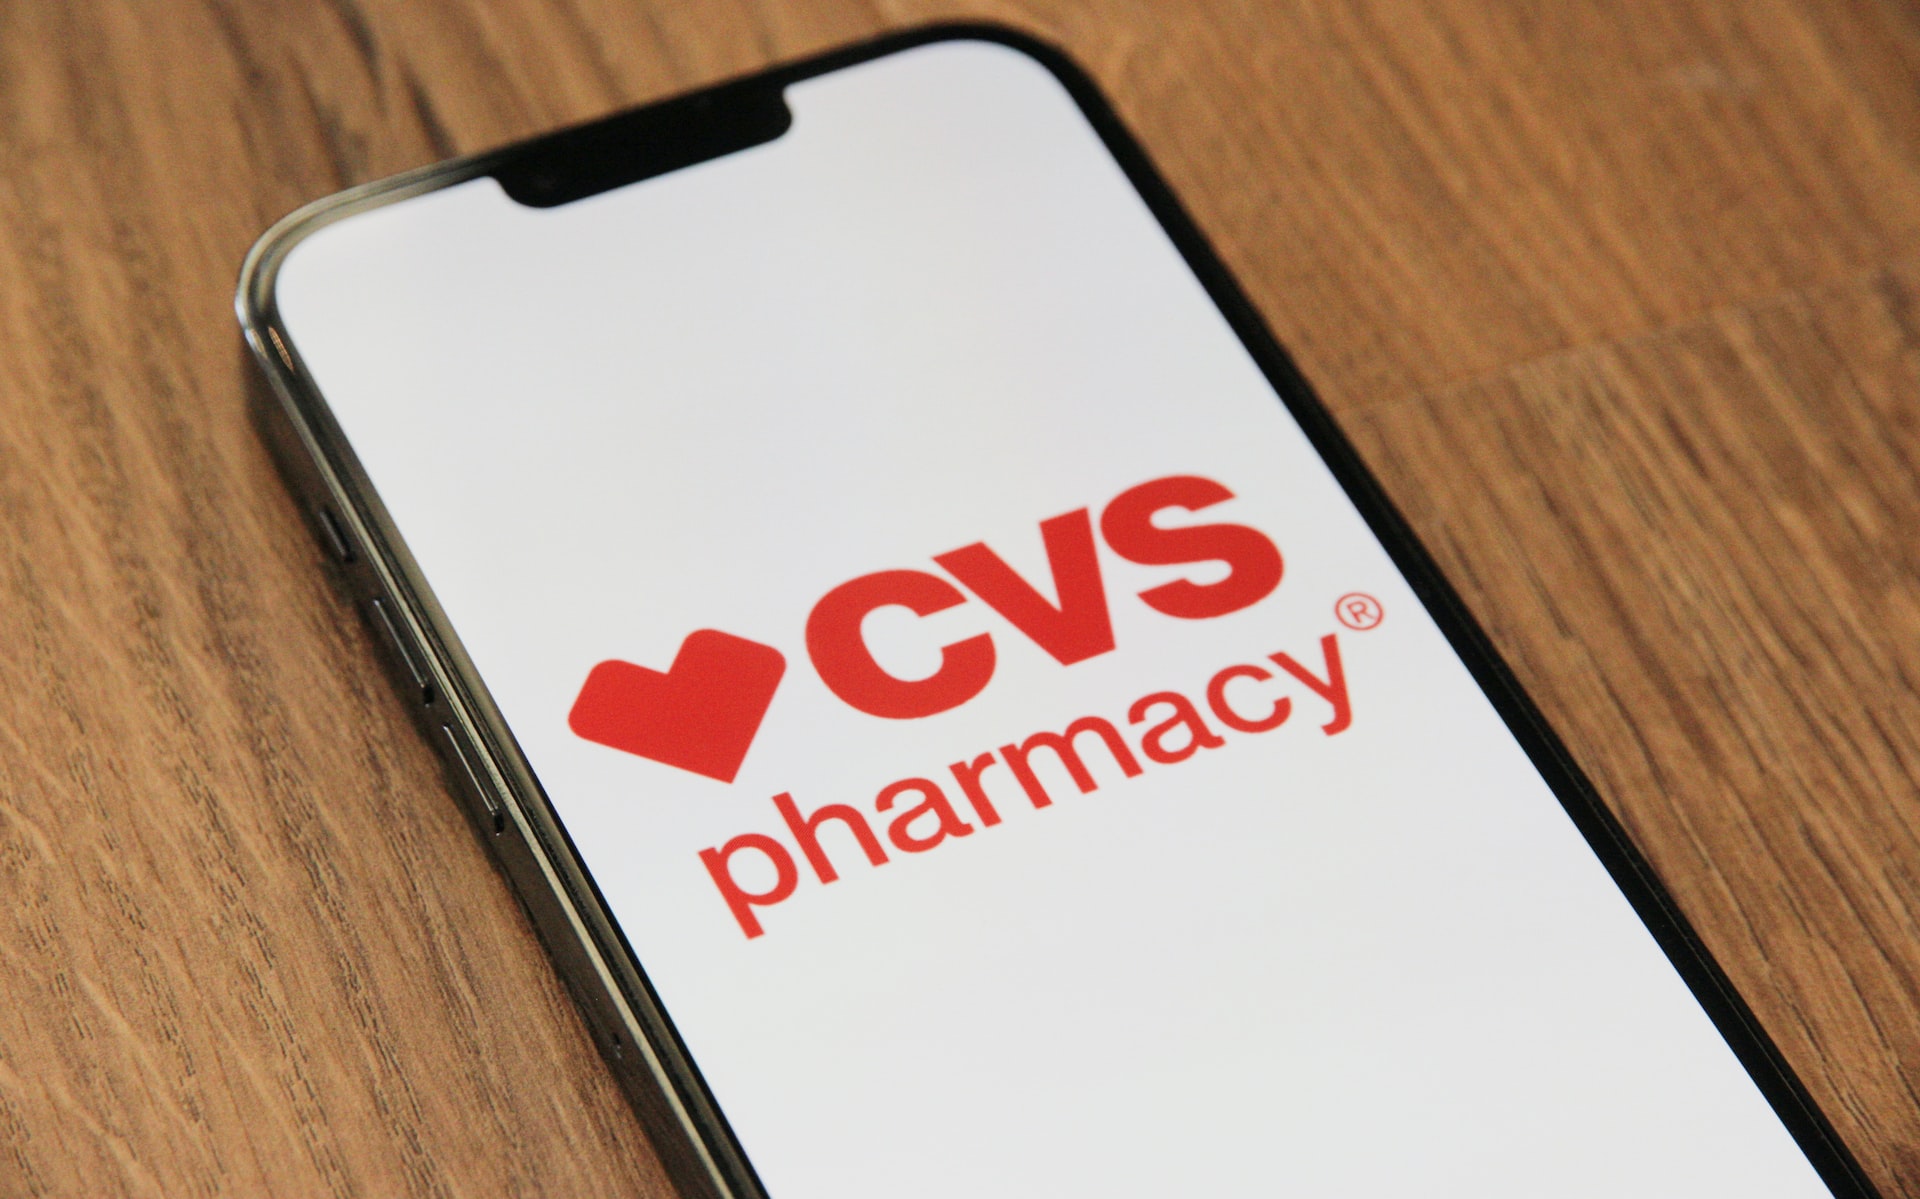 image of CVS pharmacy logo on a smartphone